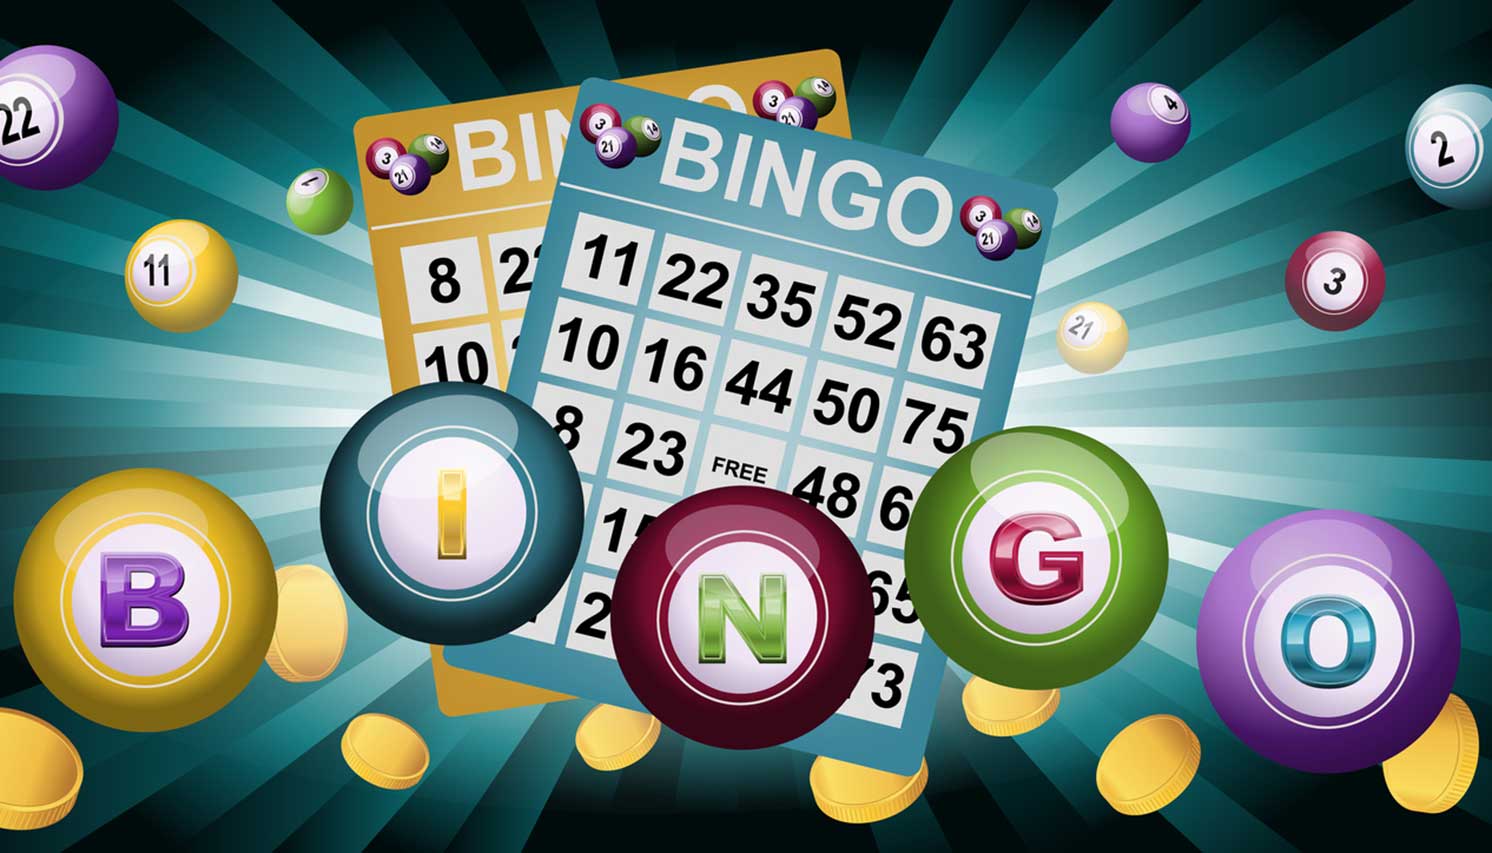 Bingo Rules and Regulations